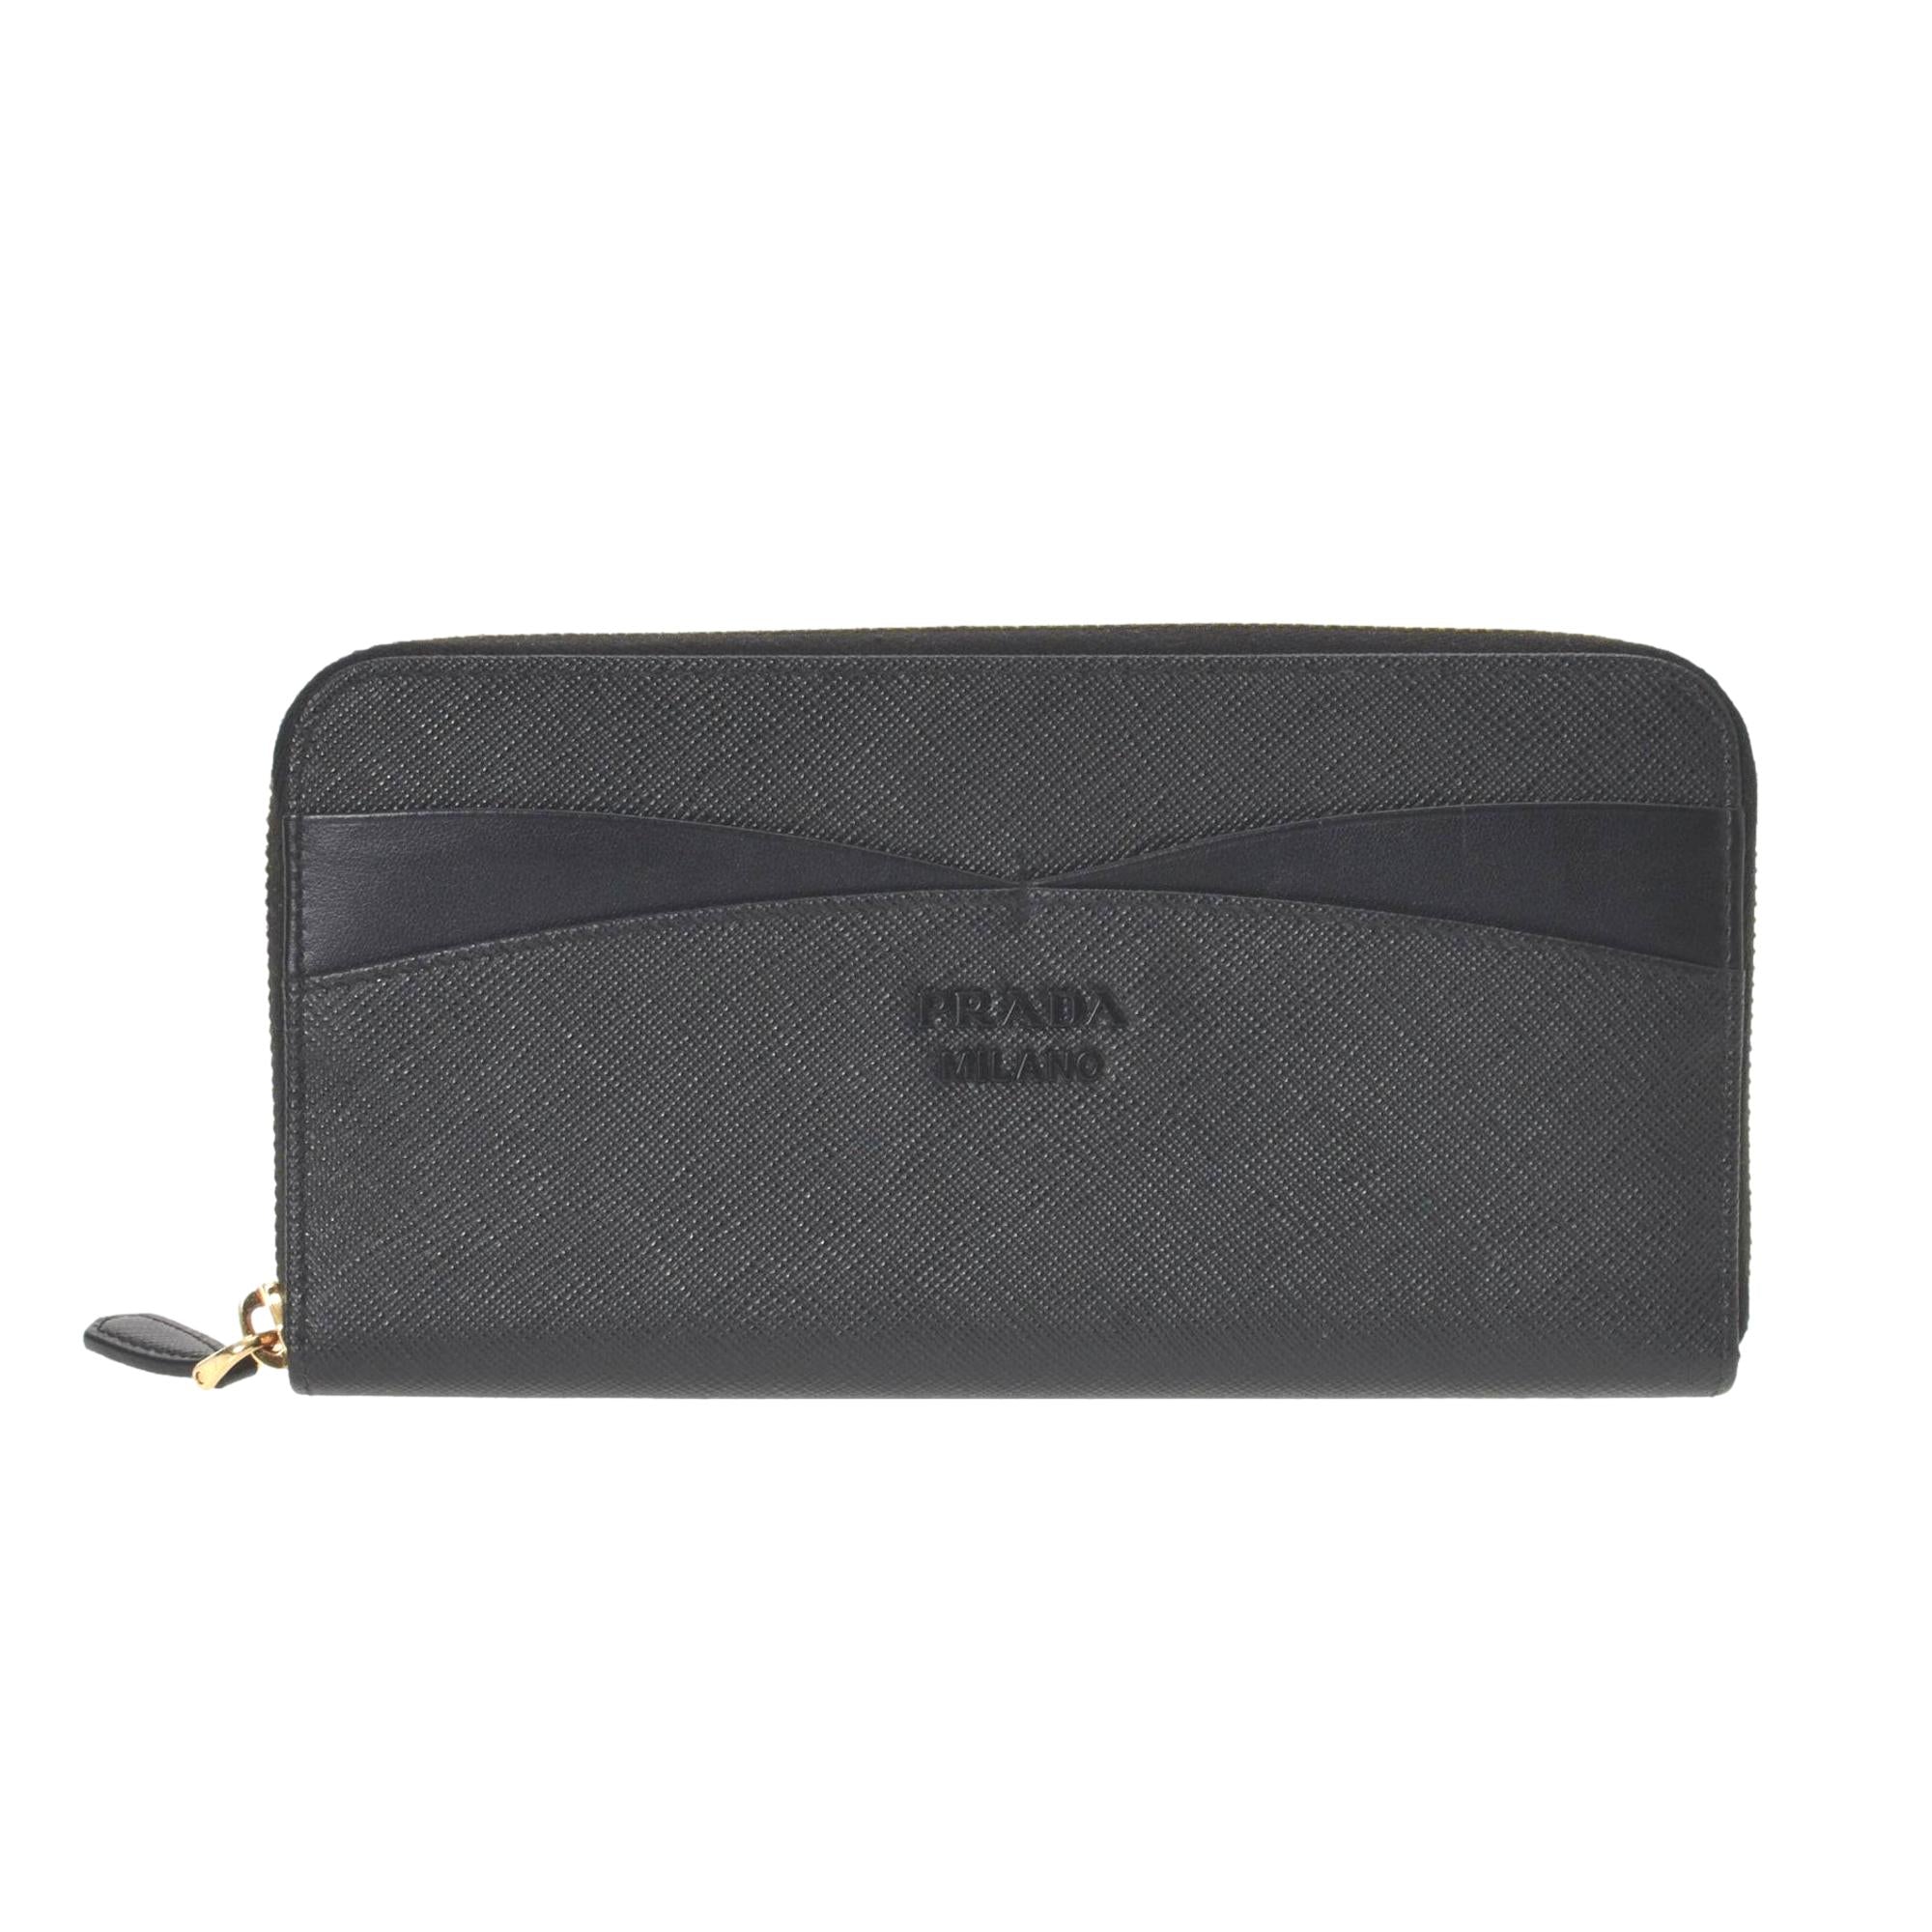 Black Large Saffiano Leather Wallet | PRADA